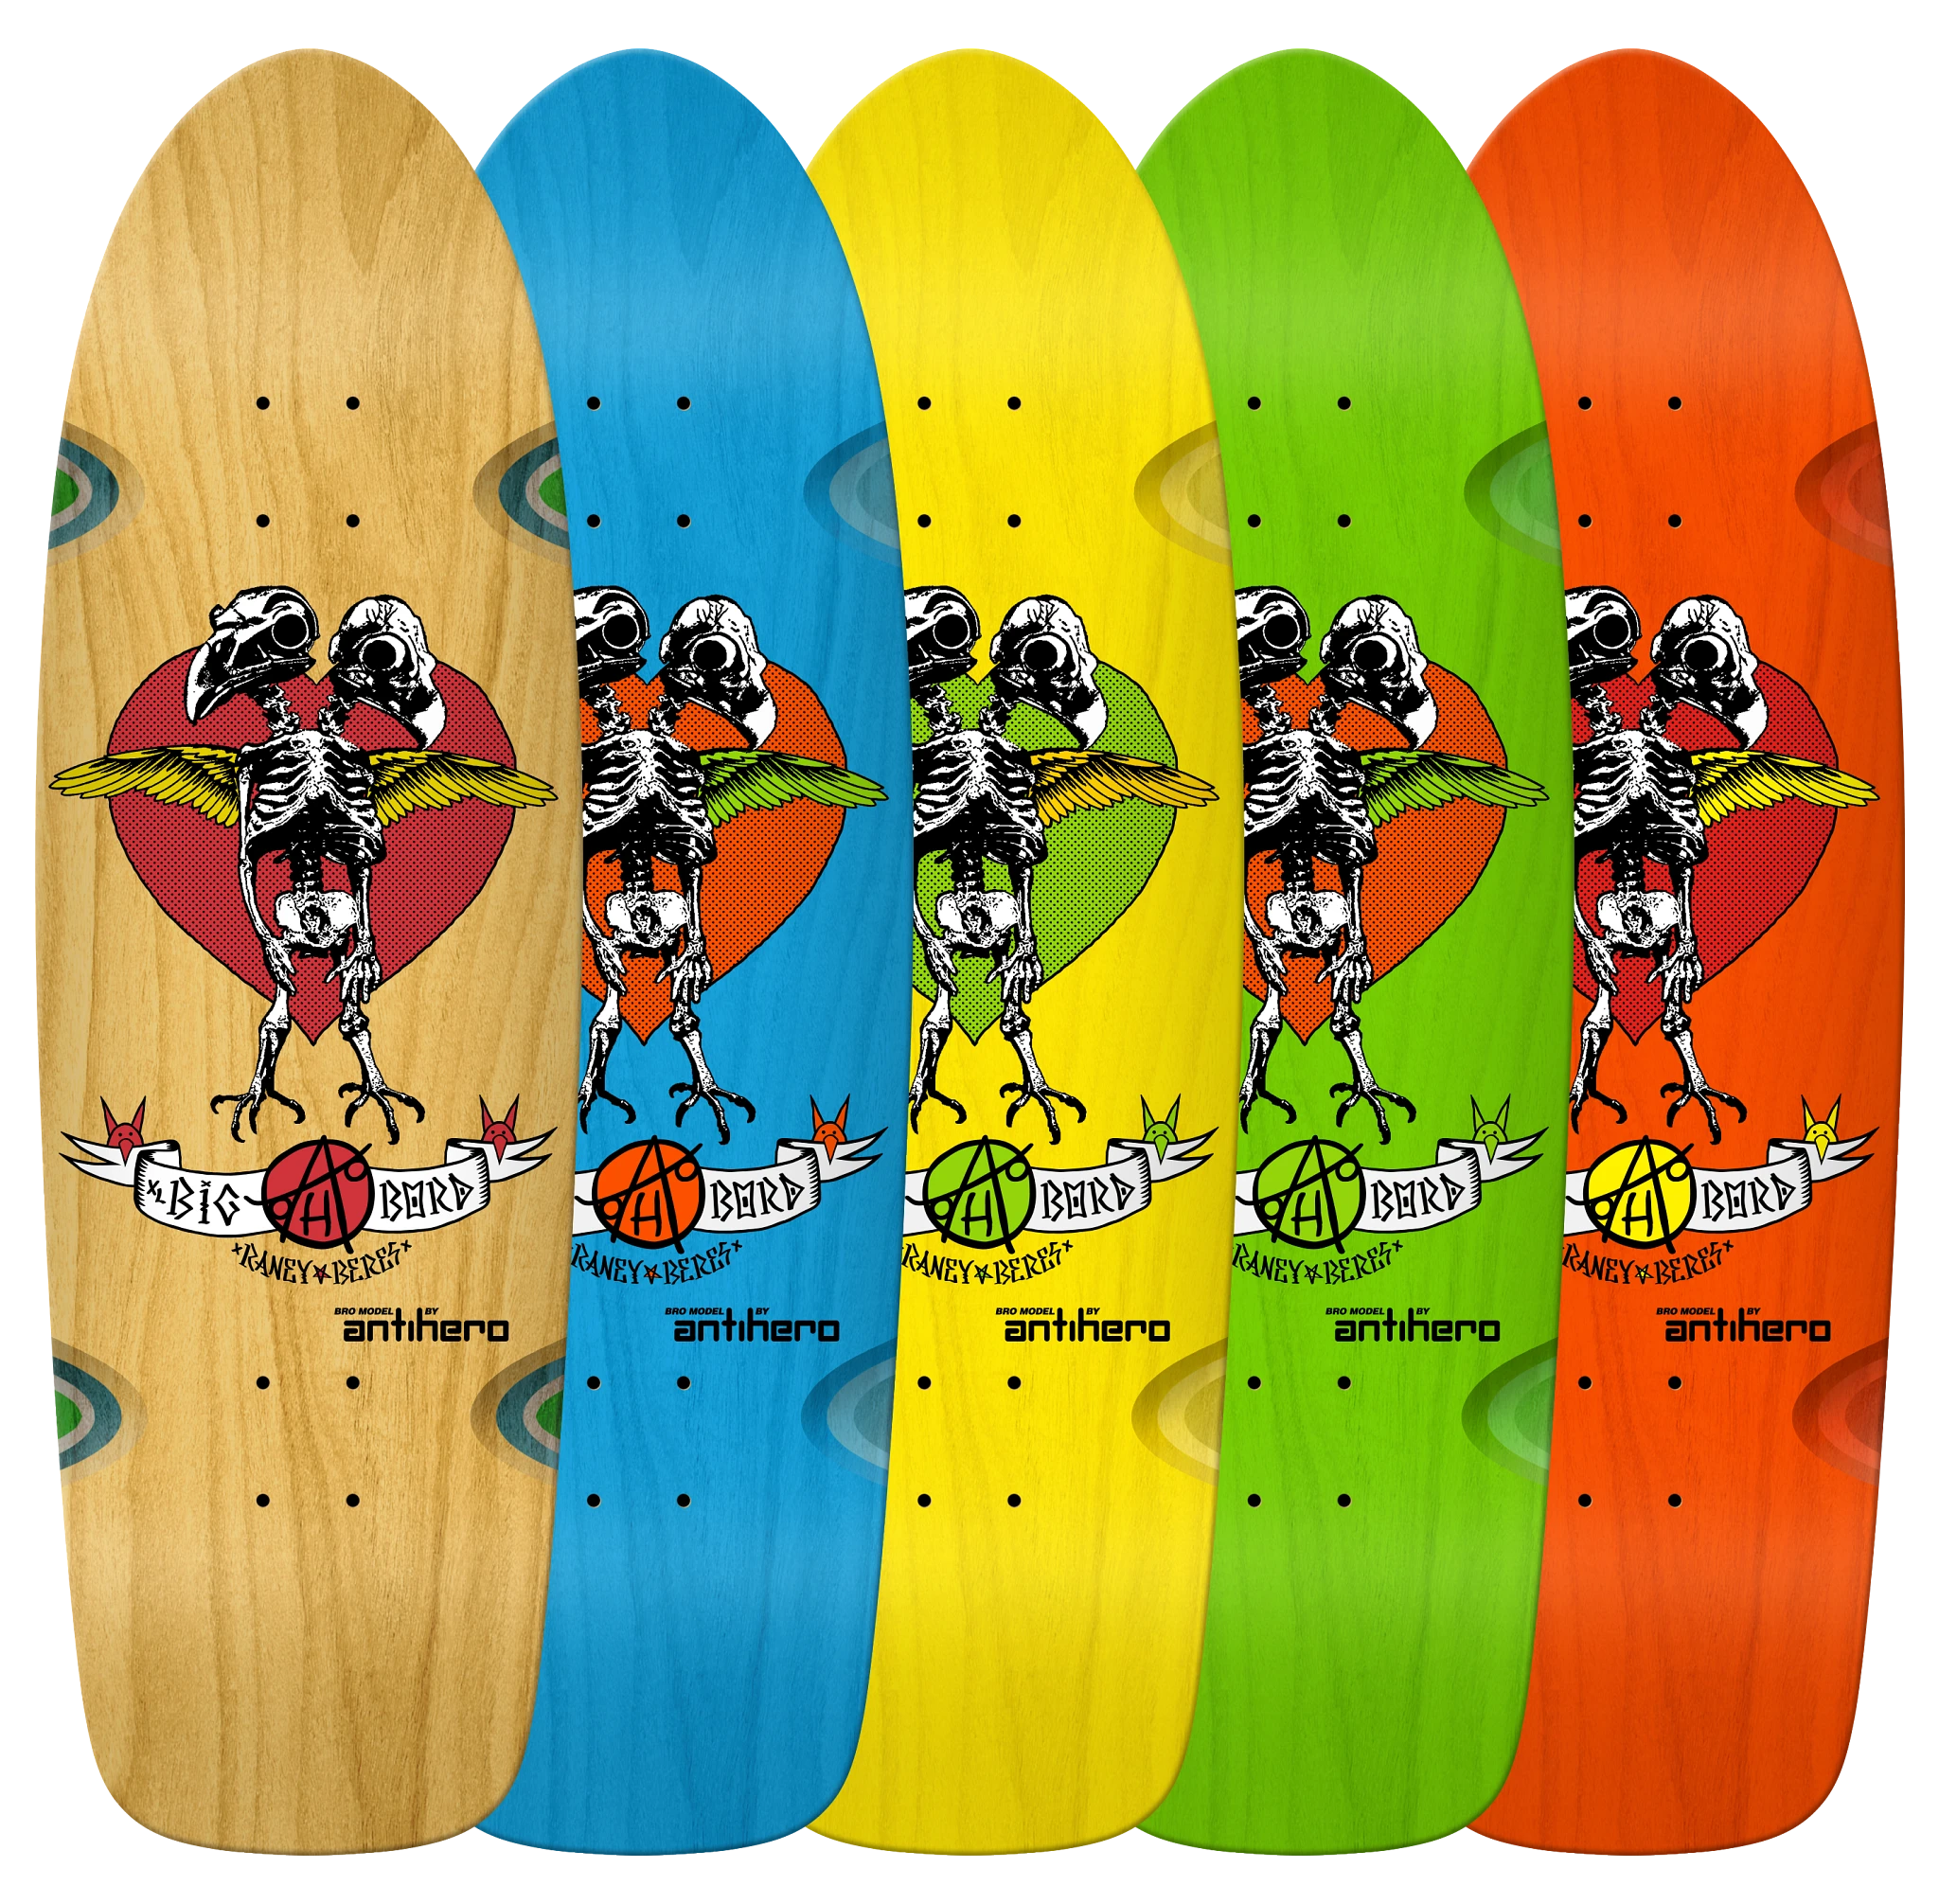 Anti Hero Skateboards "Raney Beres- Big Bord/Big Boys spoof" in stock